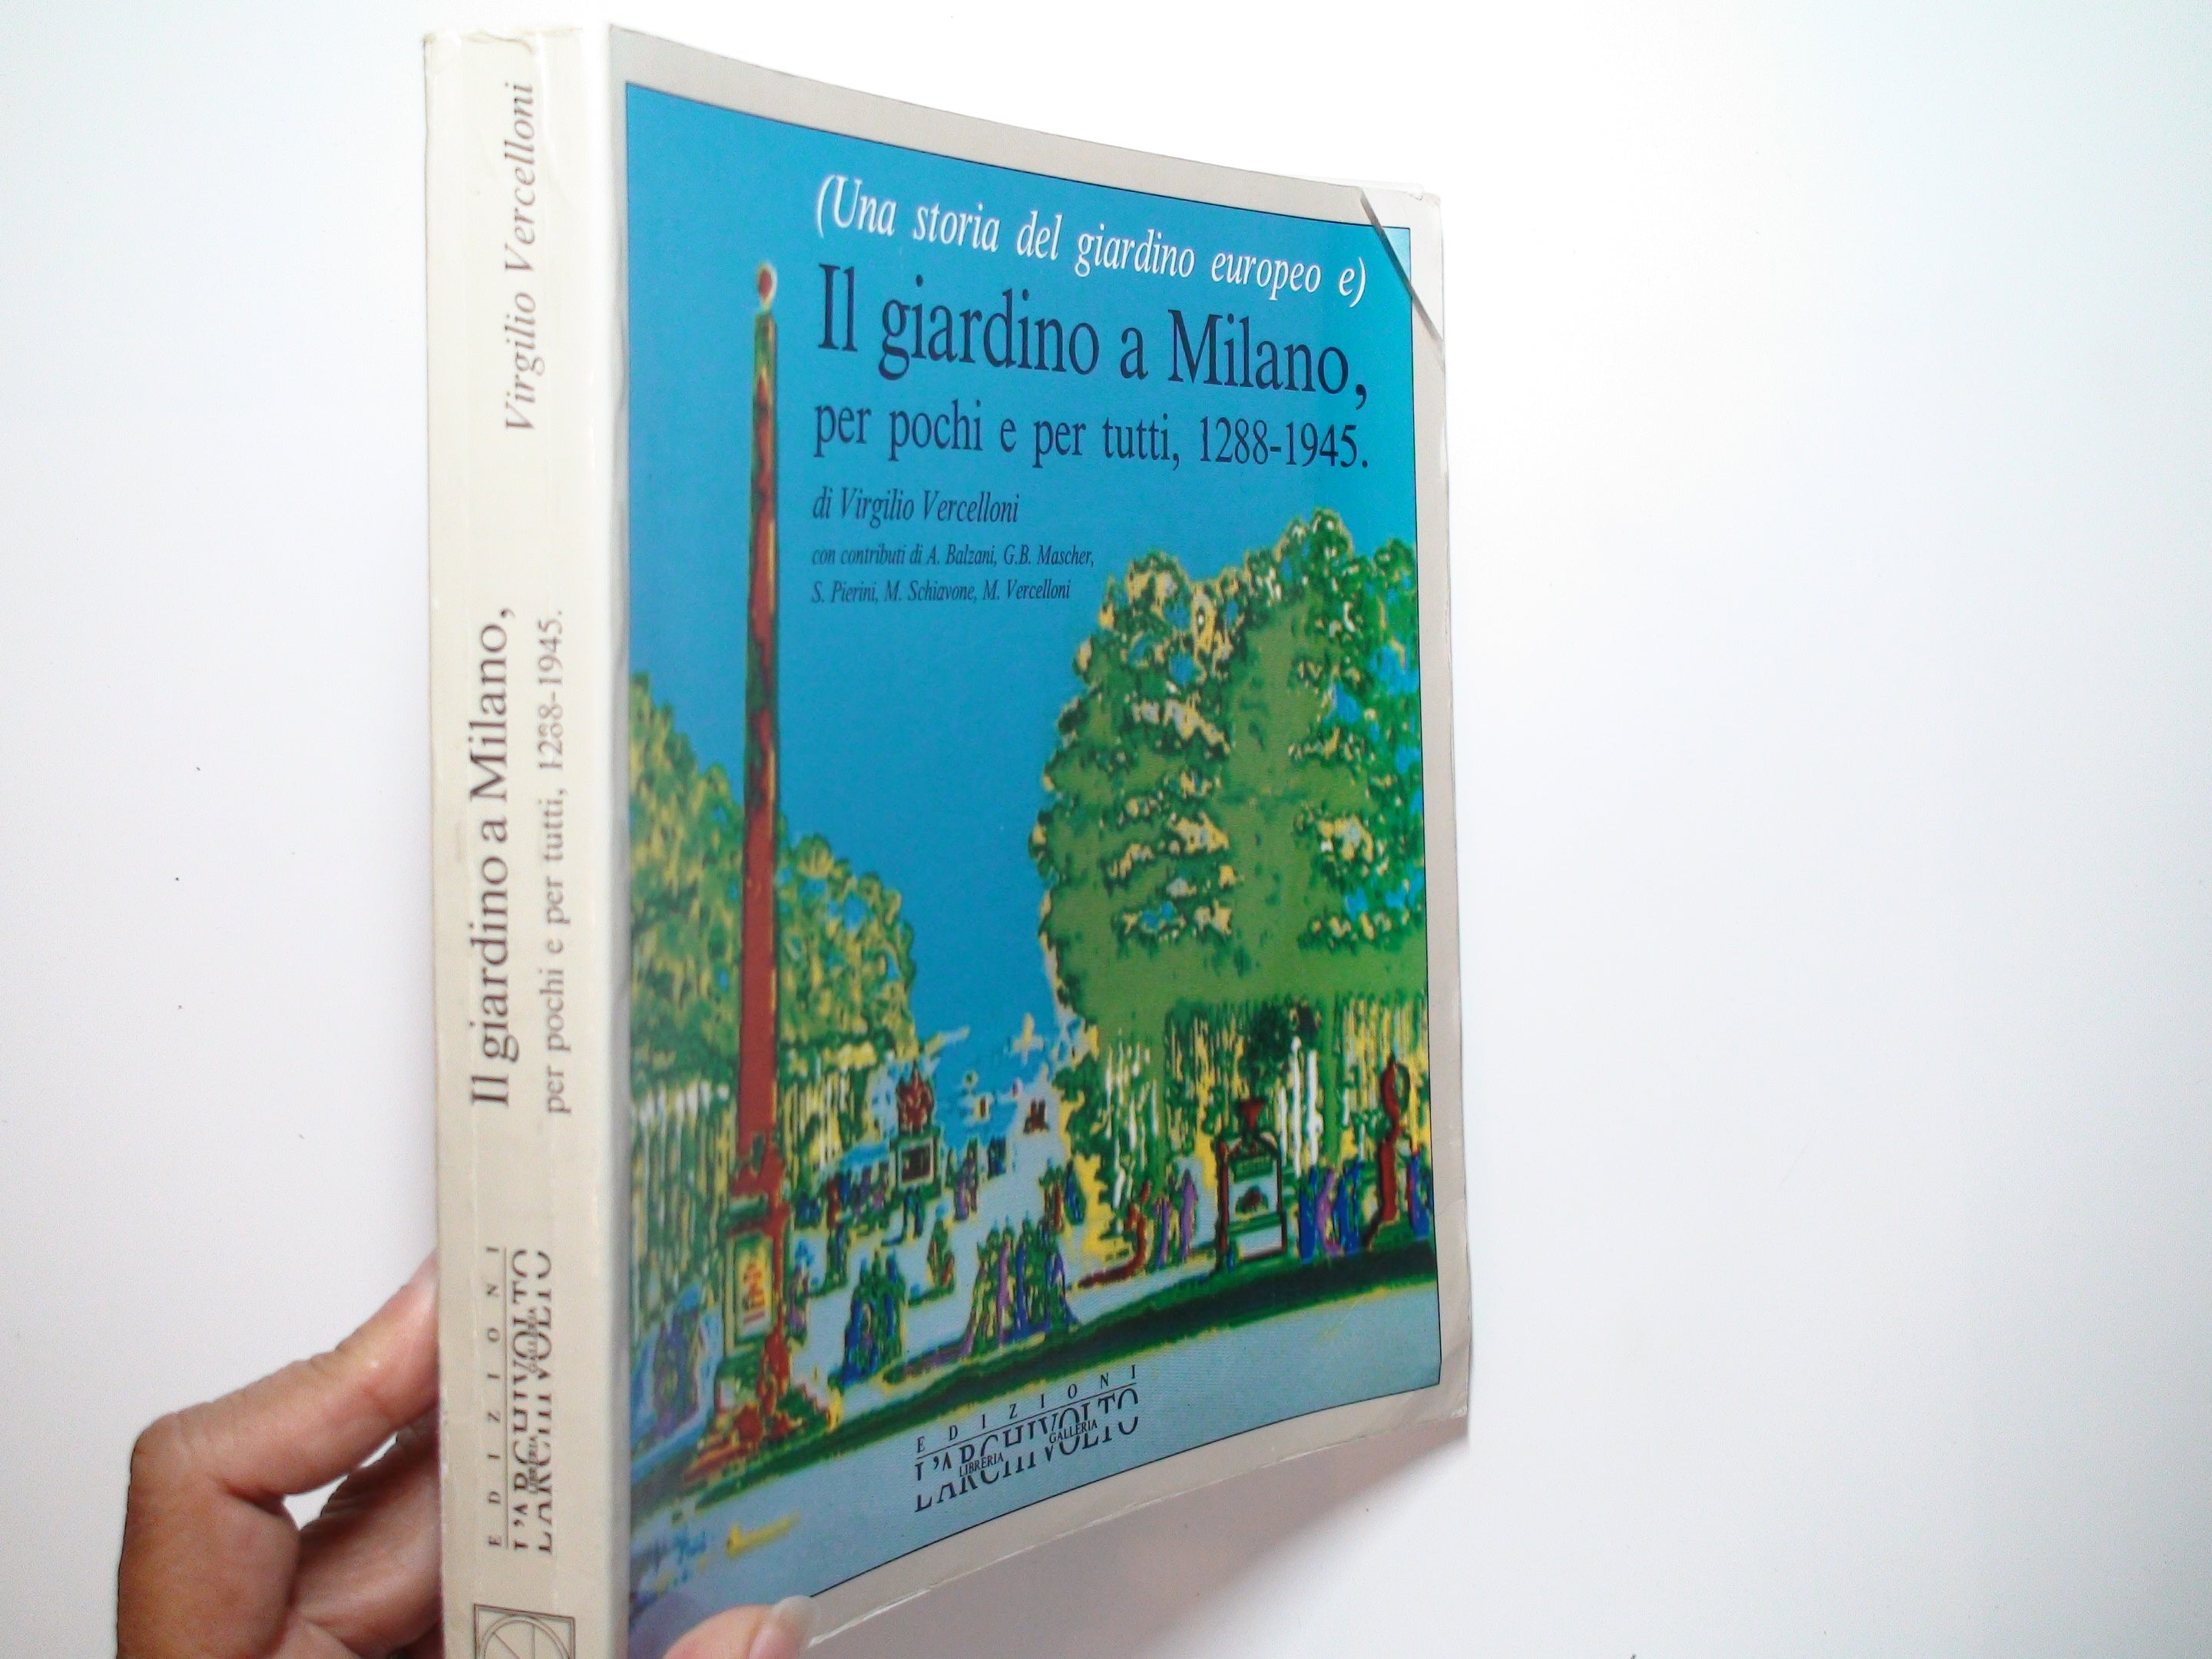 Il Giardino a Milano, Virgilio Vercelloni, Illustrated, 1st Ed, Italian, 1986